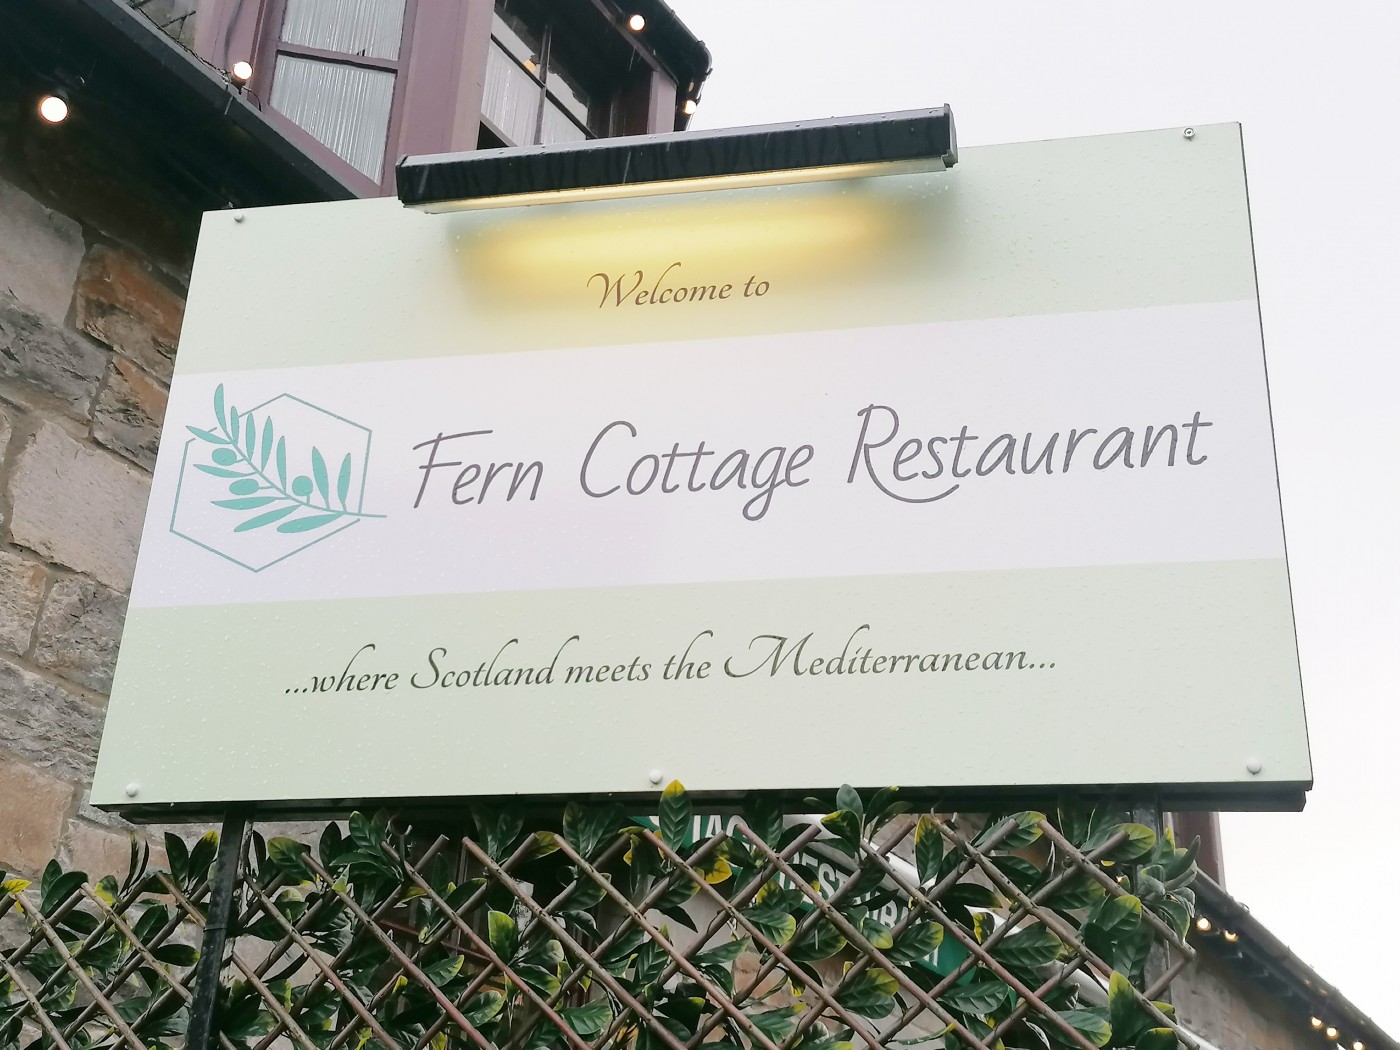 Fern Cottage restaurant based in Pitlochry